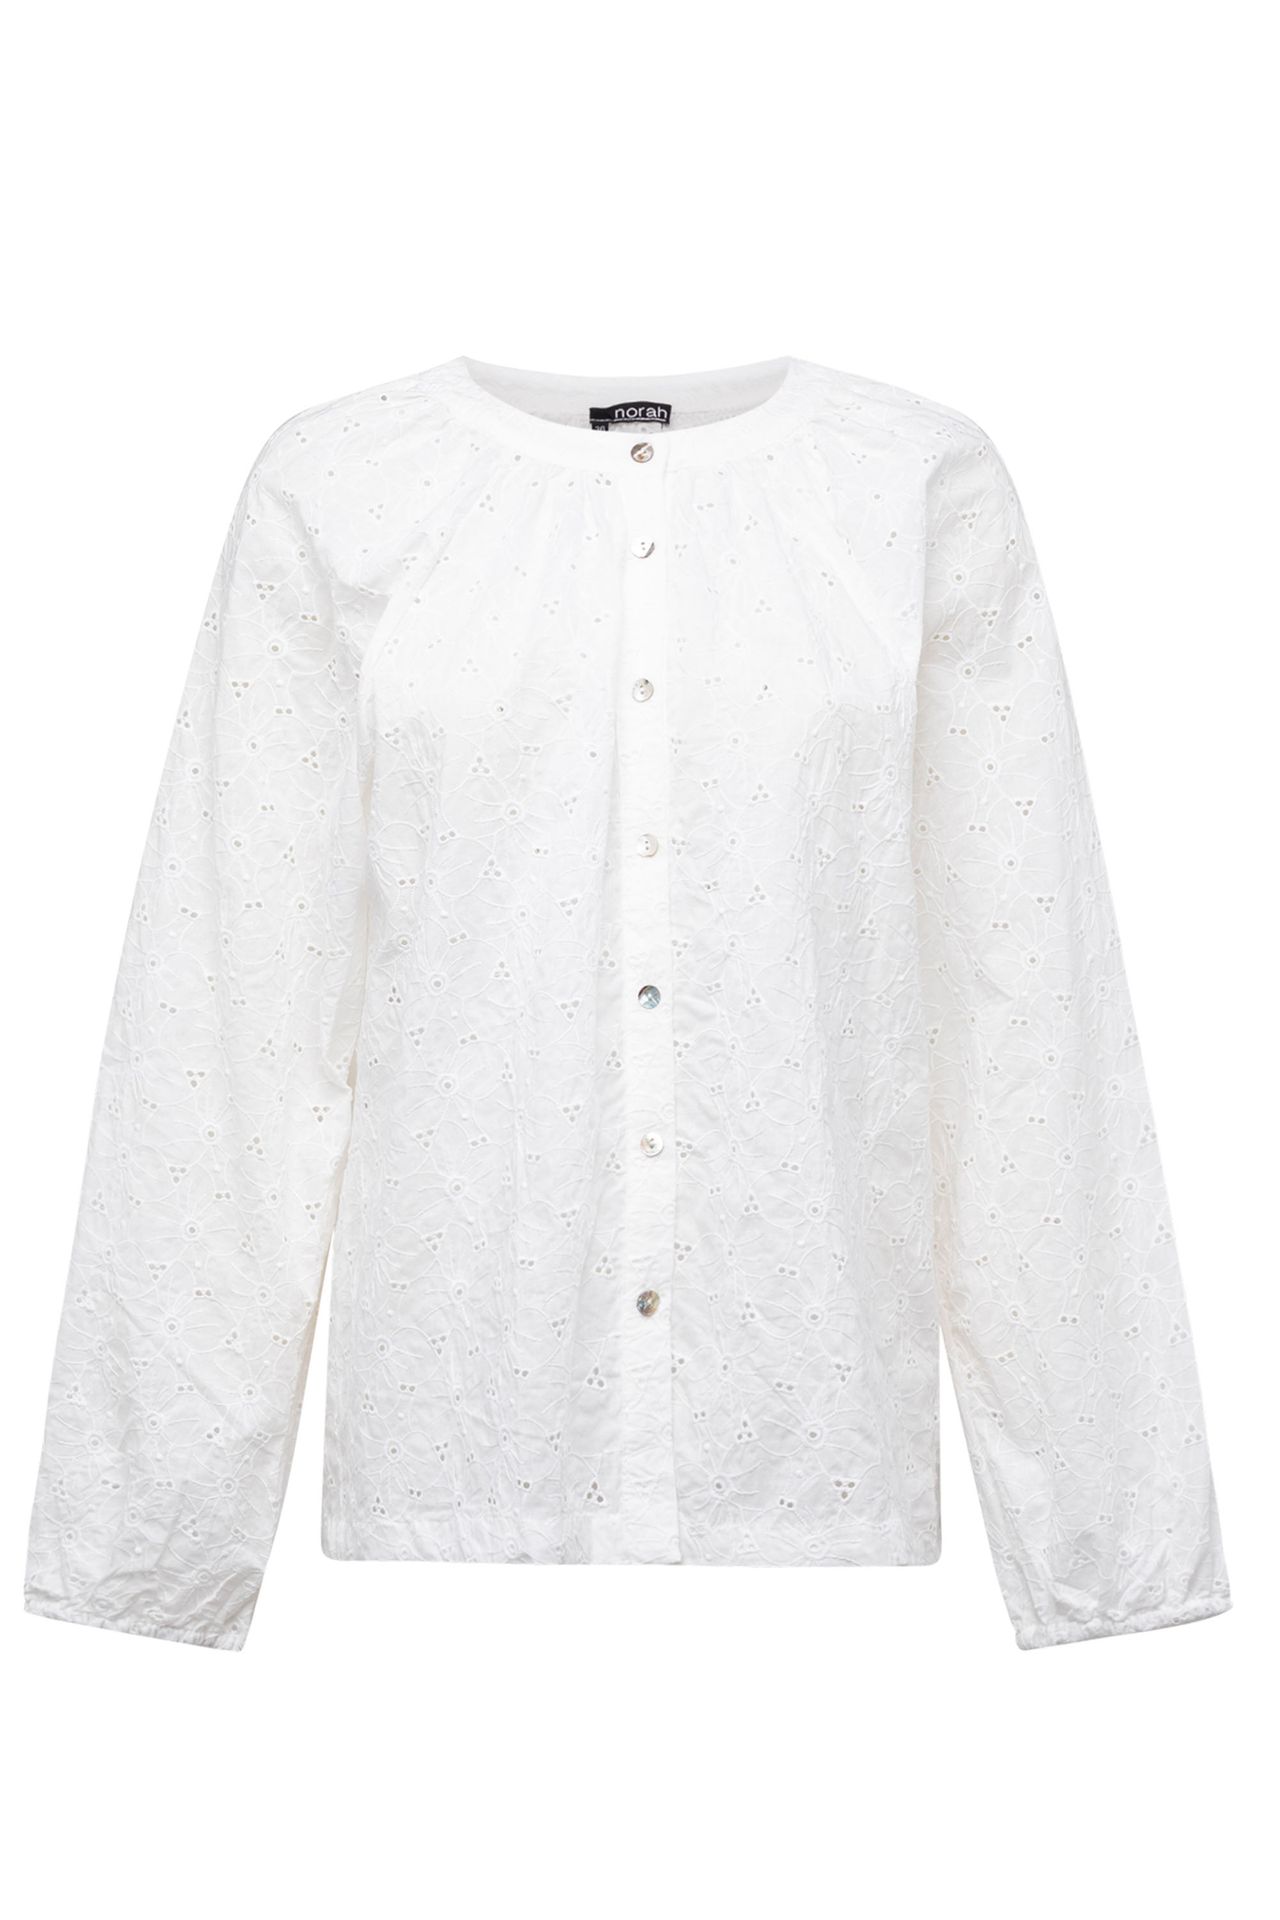 Norah Off-white blouse off-white 213650-101